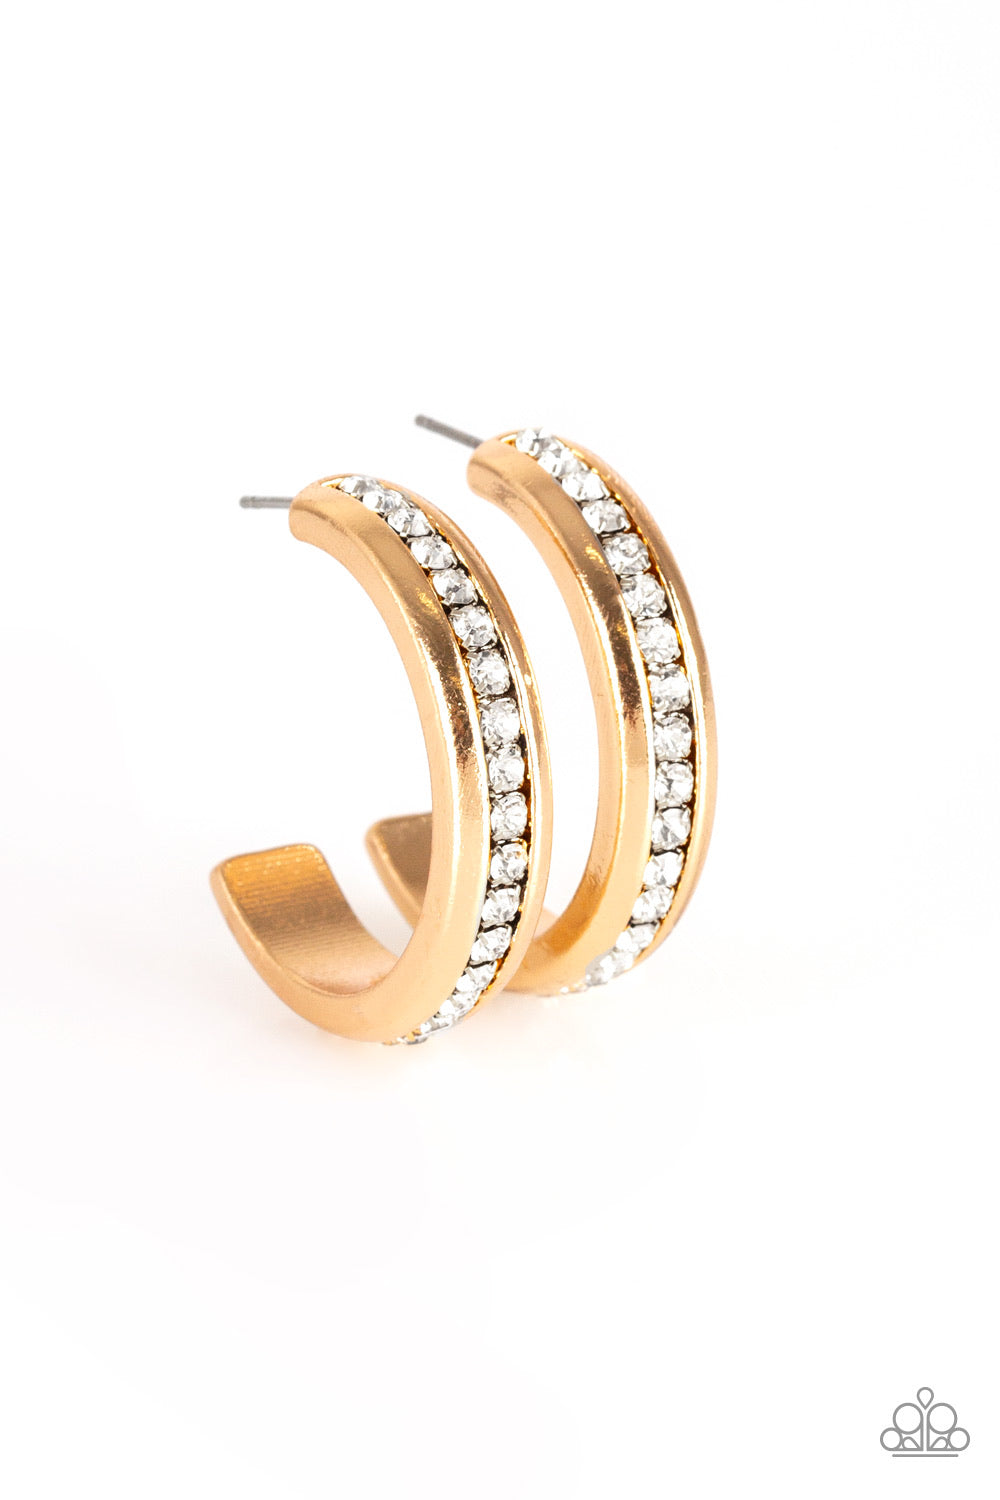 5th Avenue Fashionista Gold Hoop-Earrings